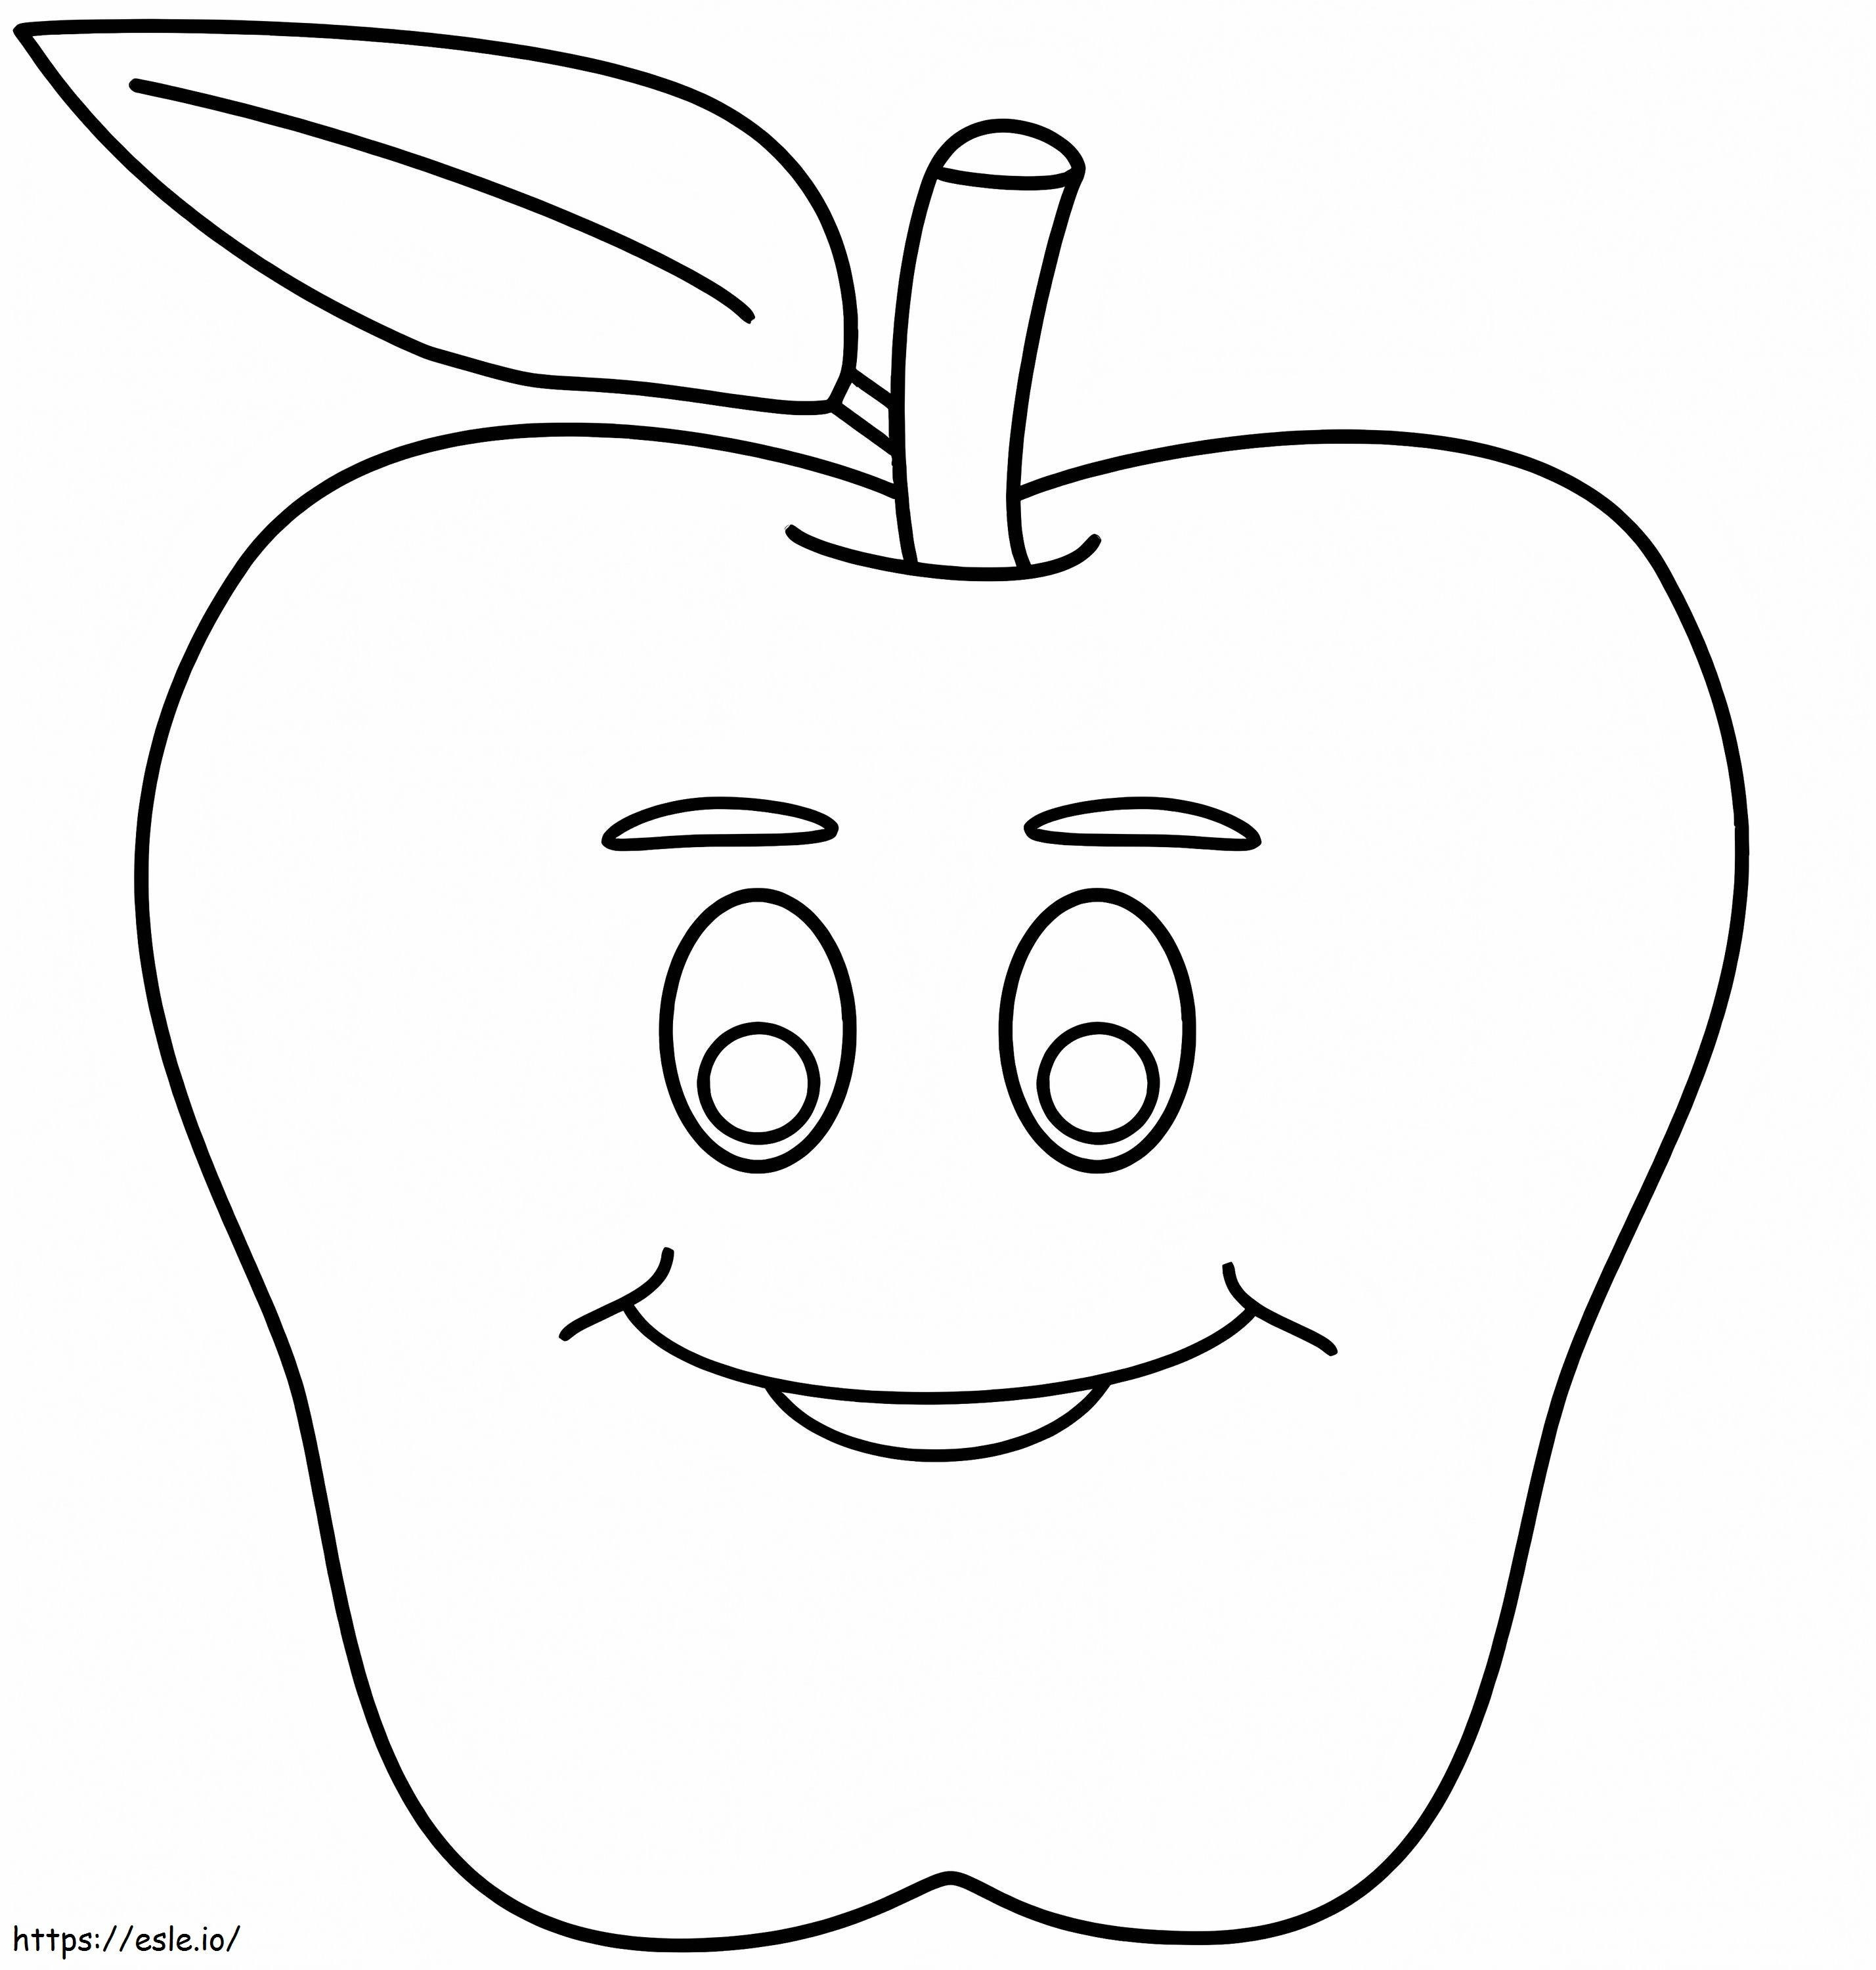 Uśmiechnięta twarz jabłka kolorowanka